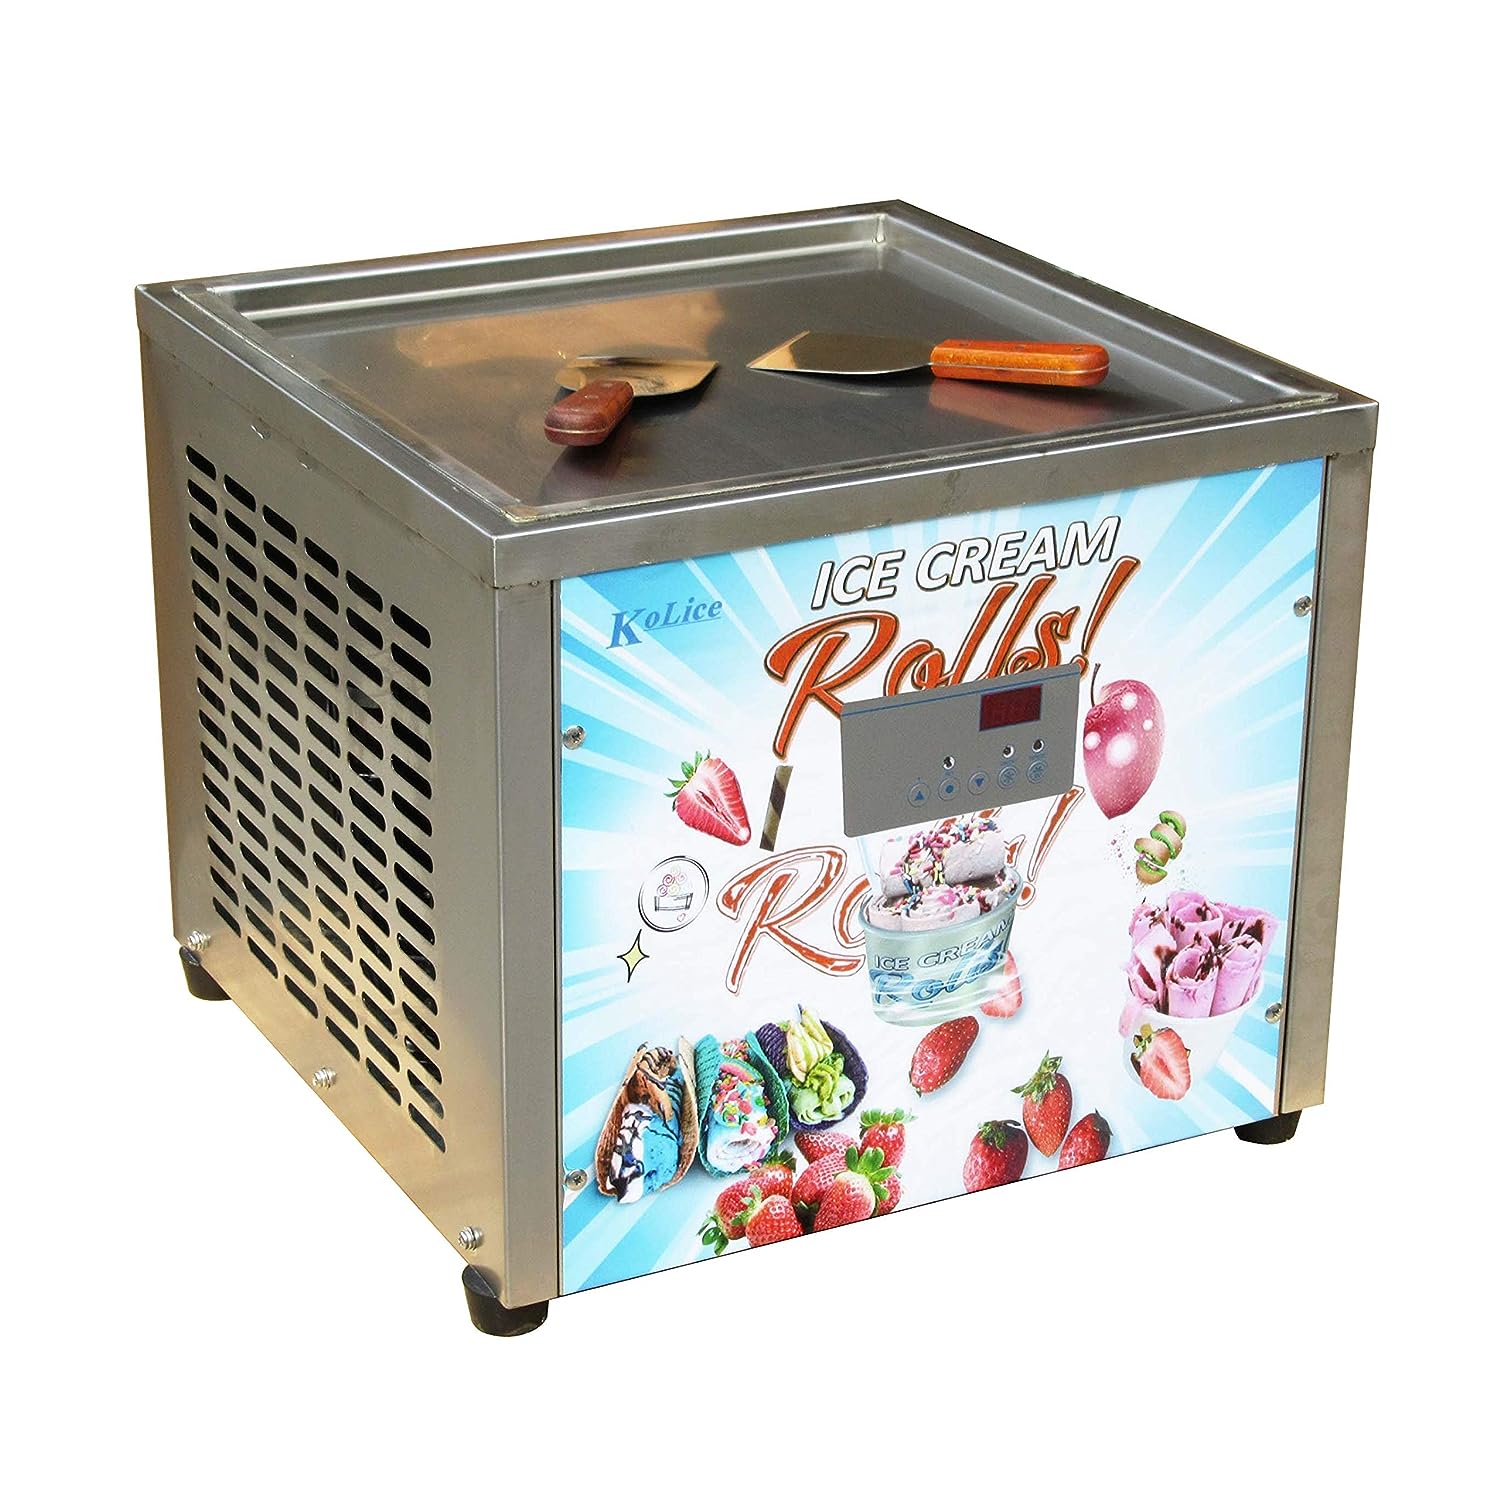 Rolled Ice Cream Machine - equipment to make the best rolled ice cream